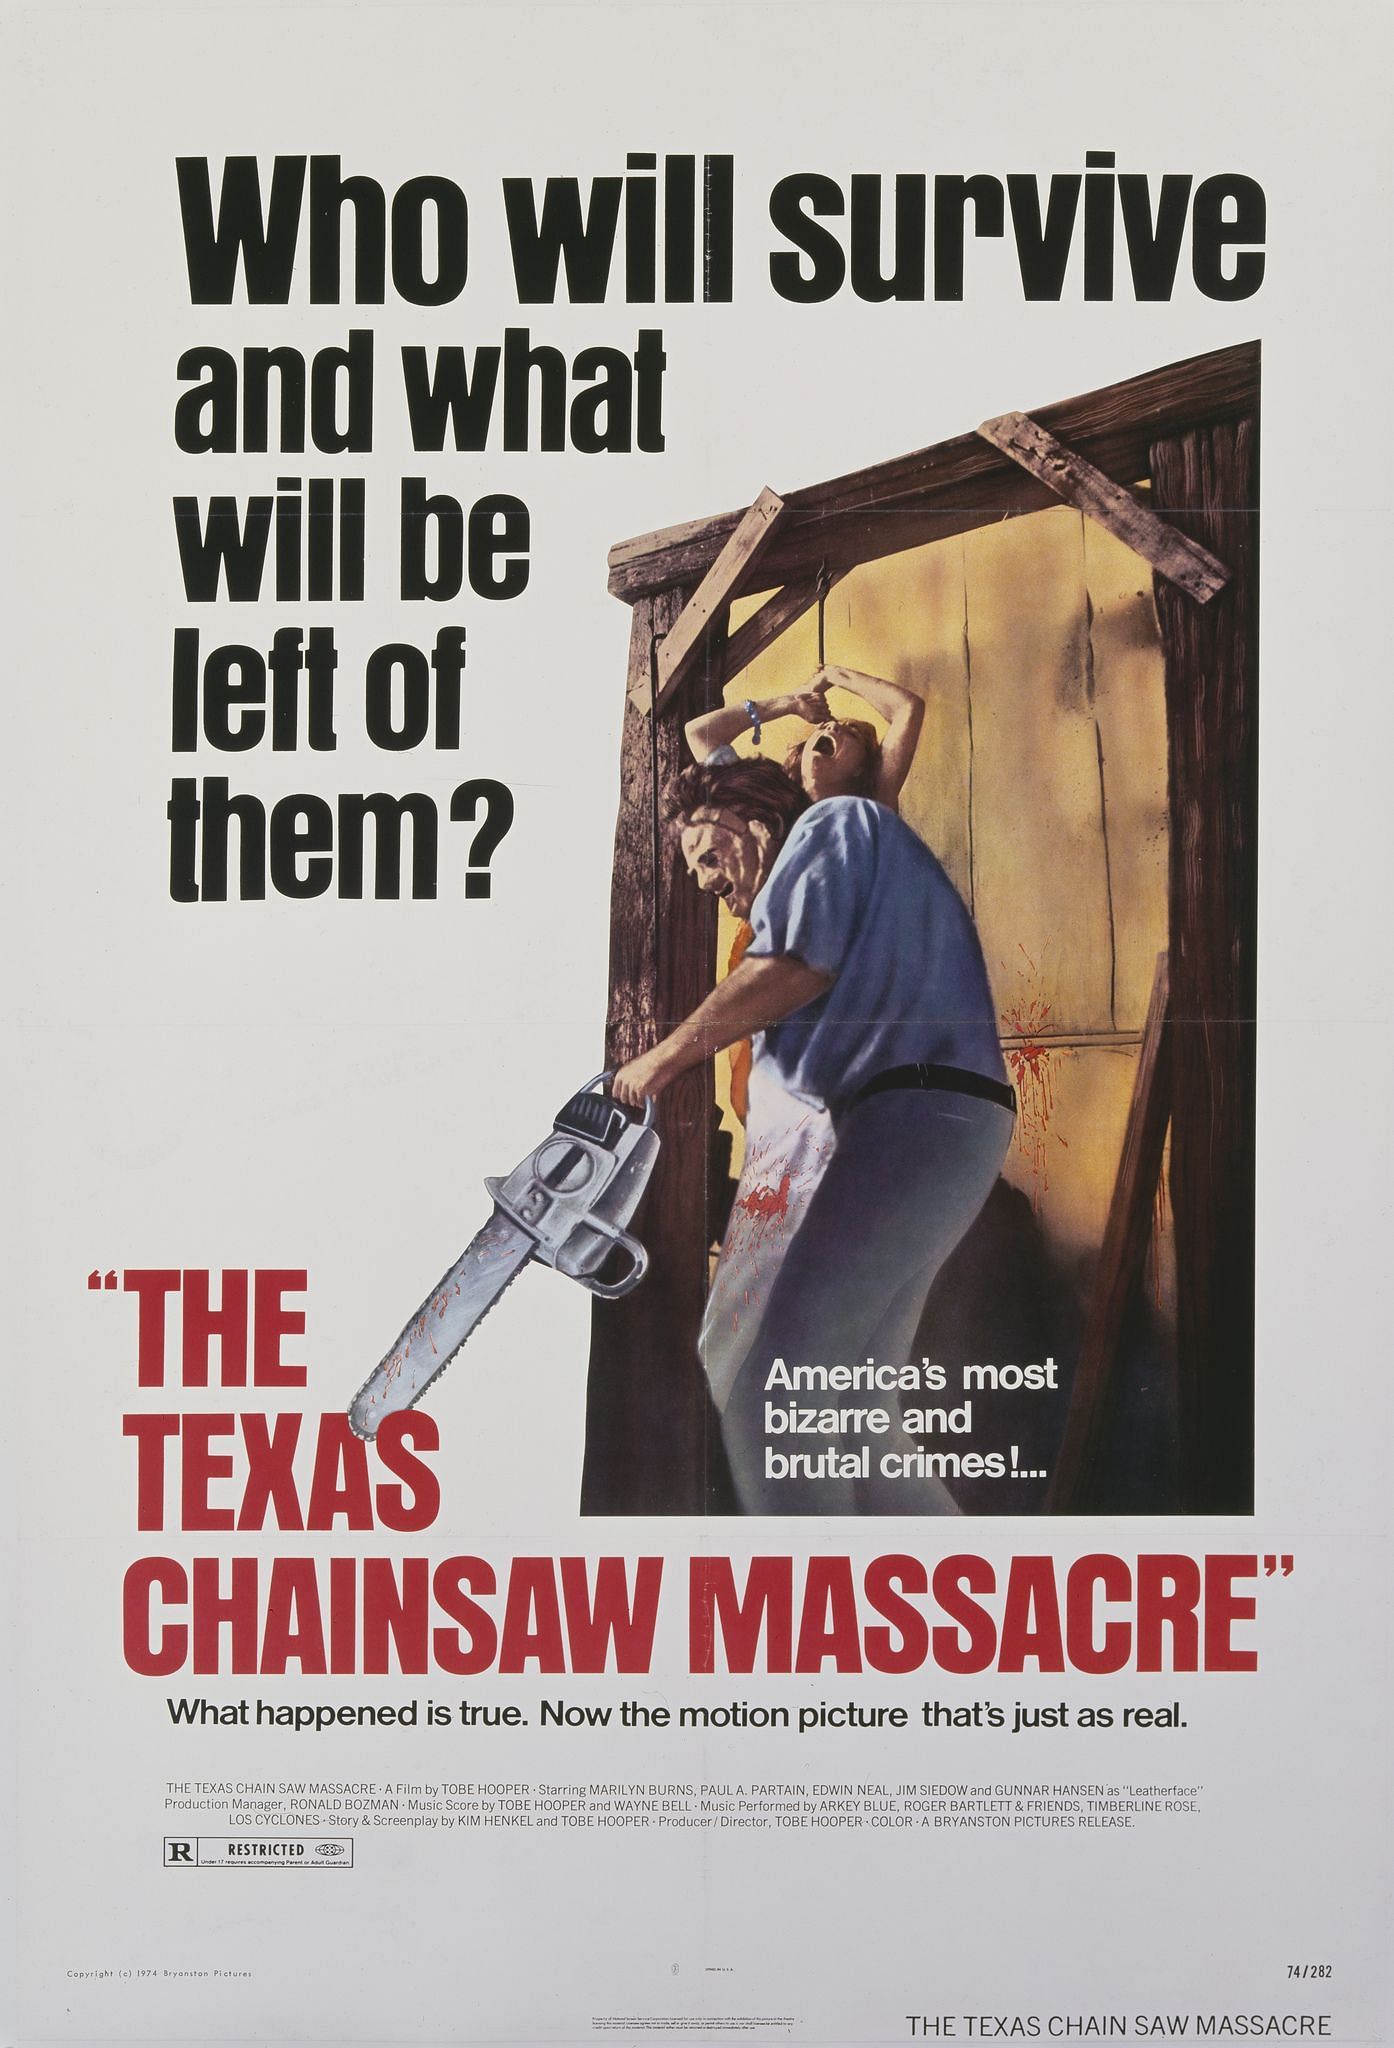 Texas Chainsaw Massacare (Image via IMDB.com)